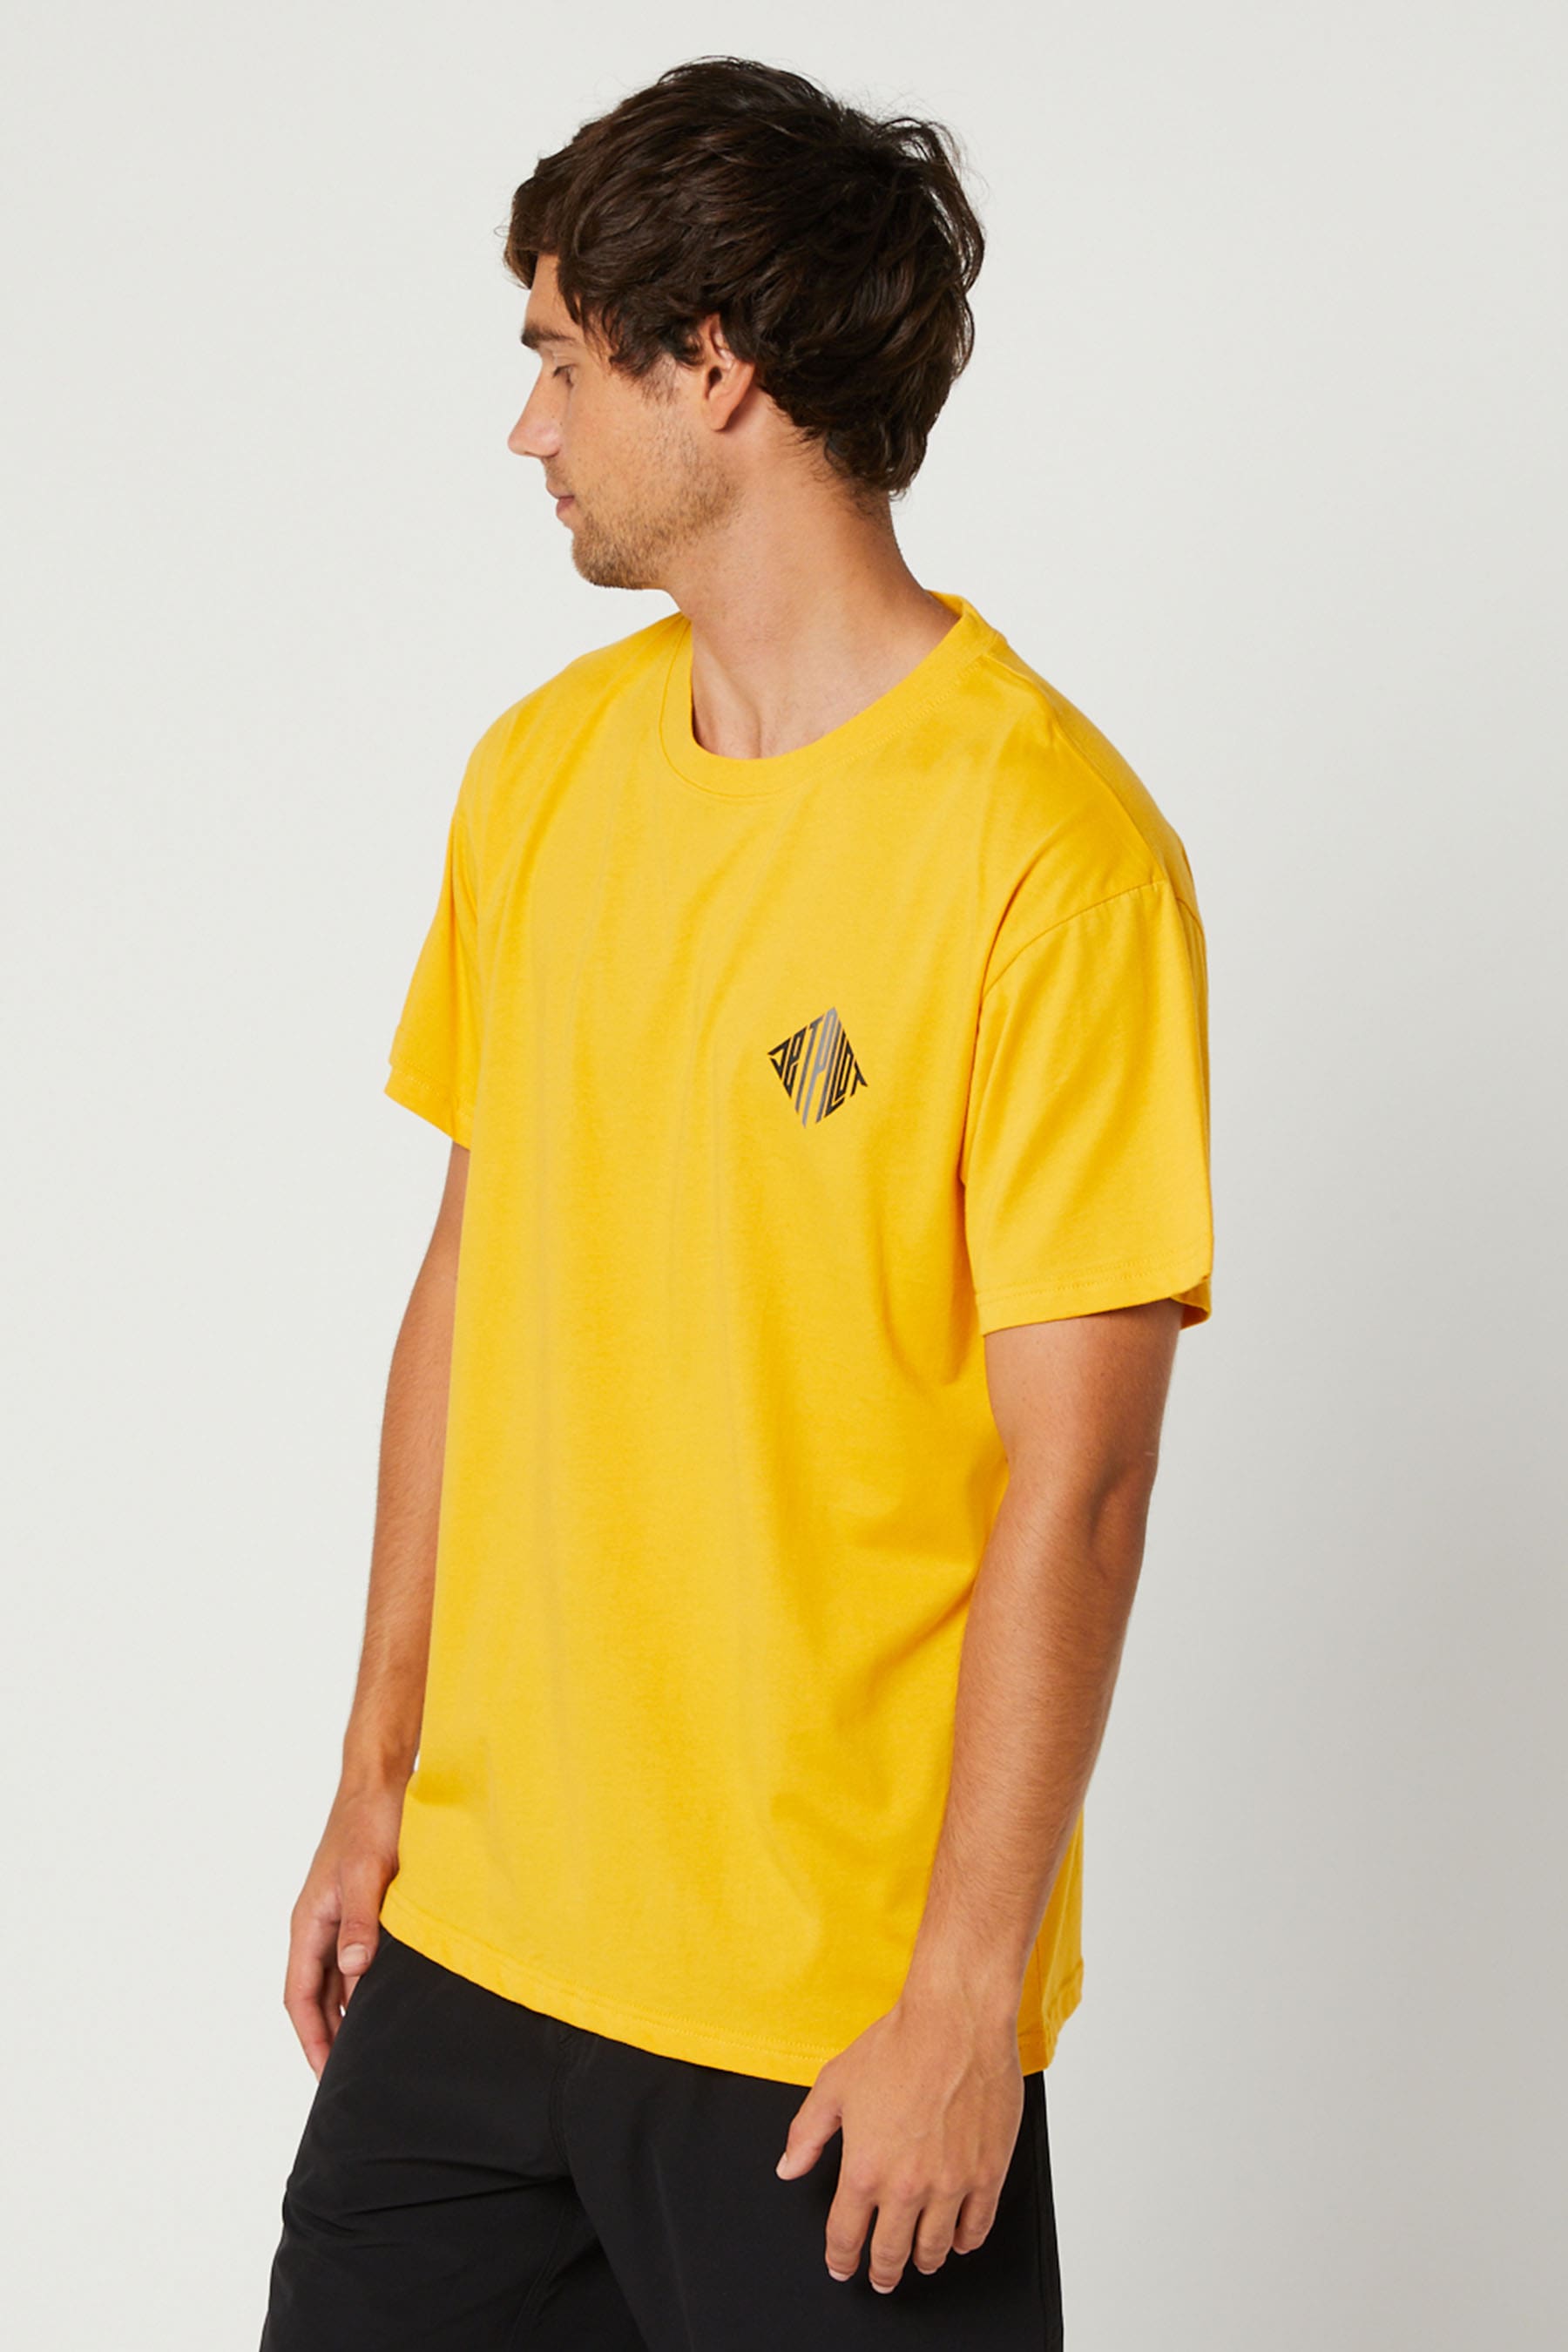 Imprint Mens SS T-Shirt Yellow 3